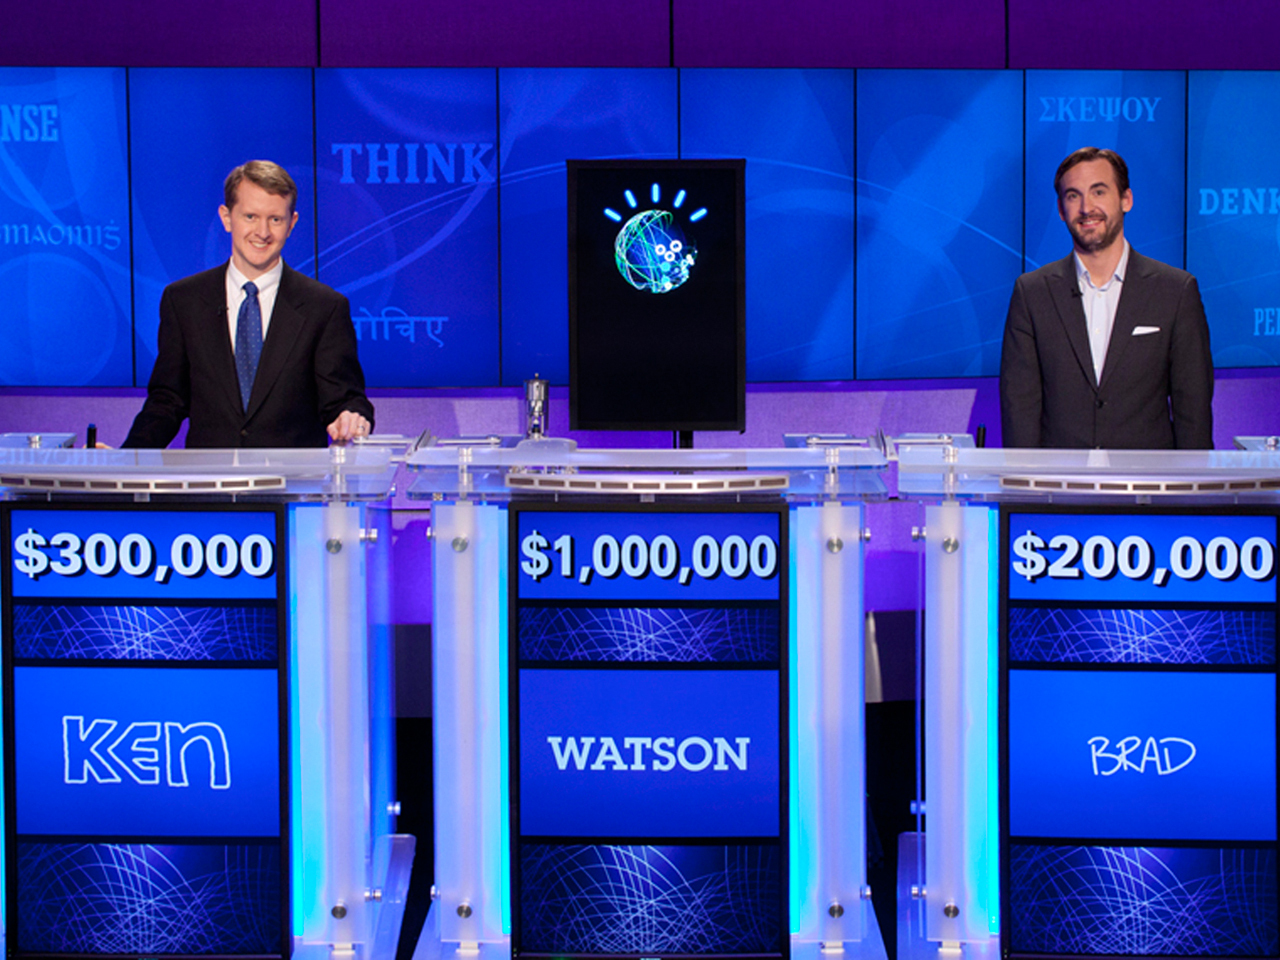 IBM's Watson winning at 'Jeopardy!'